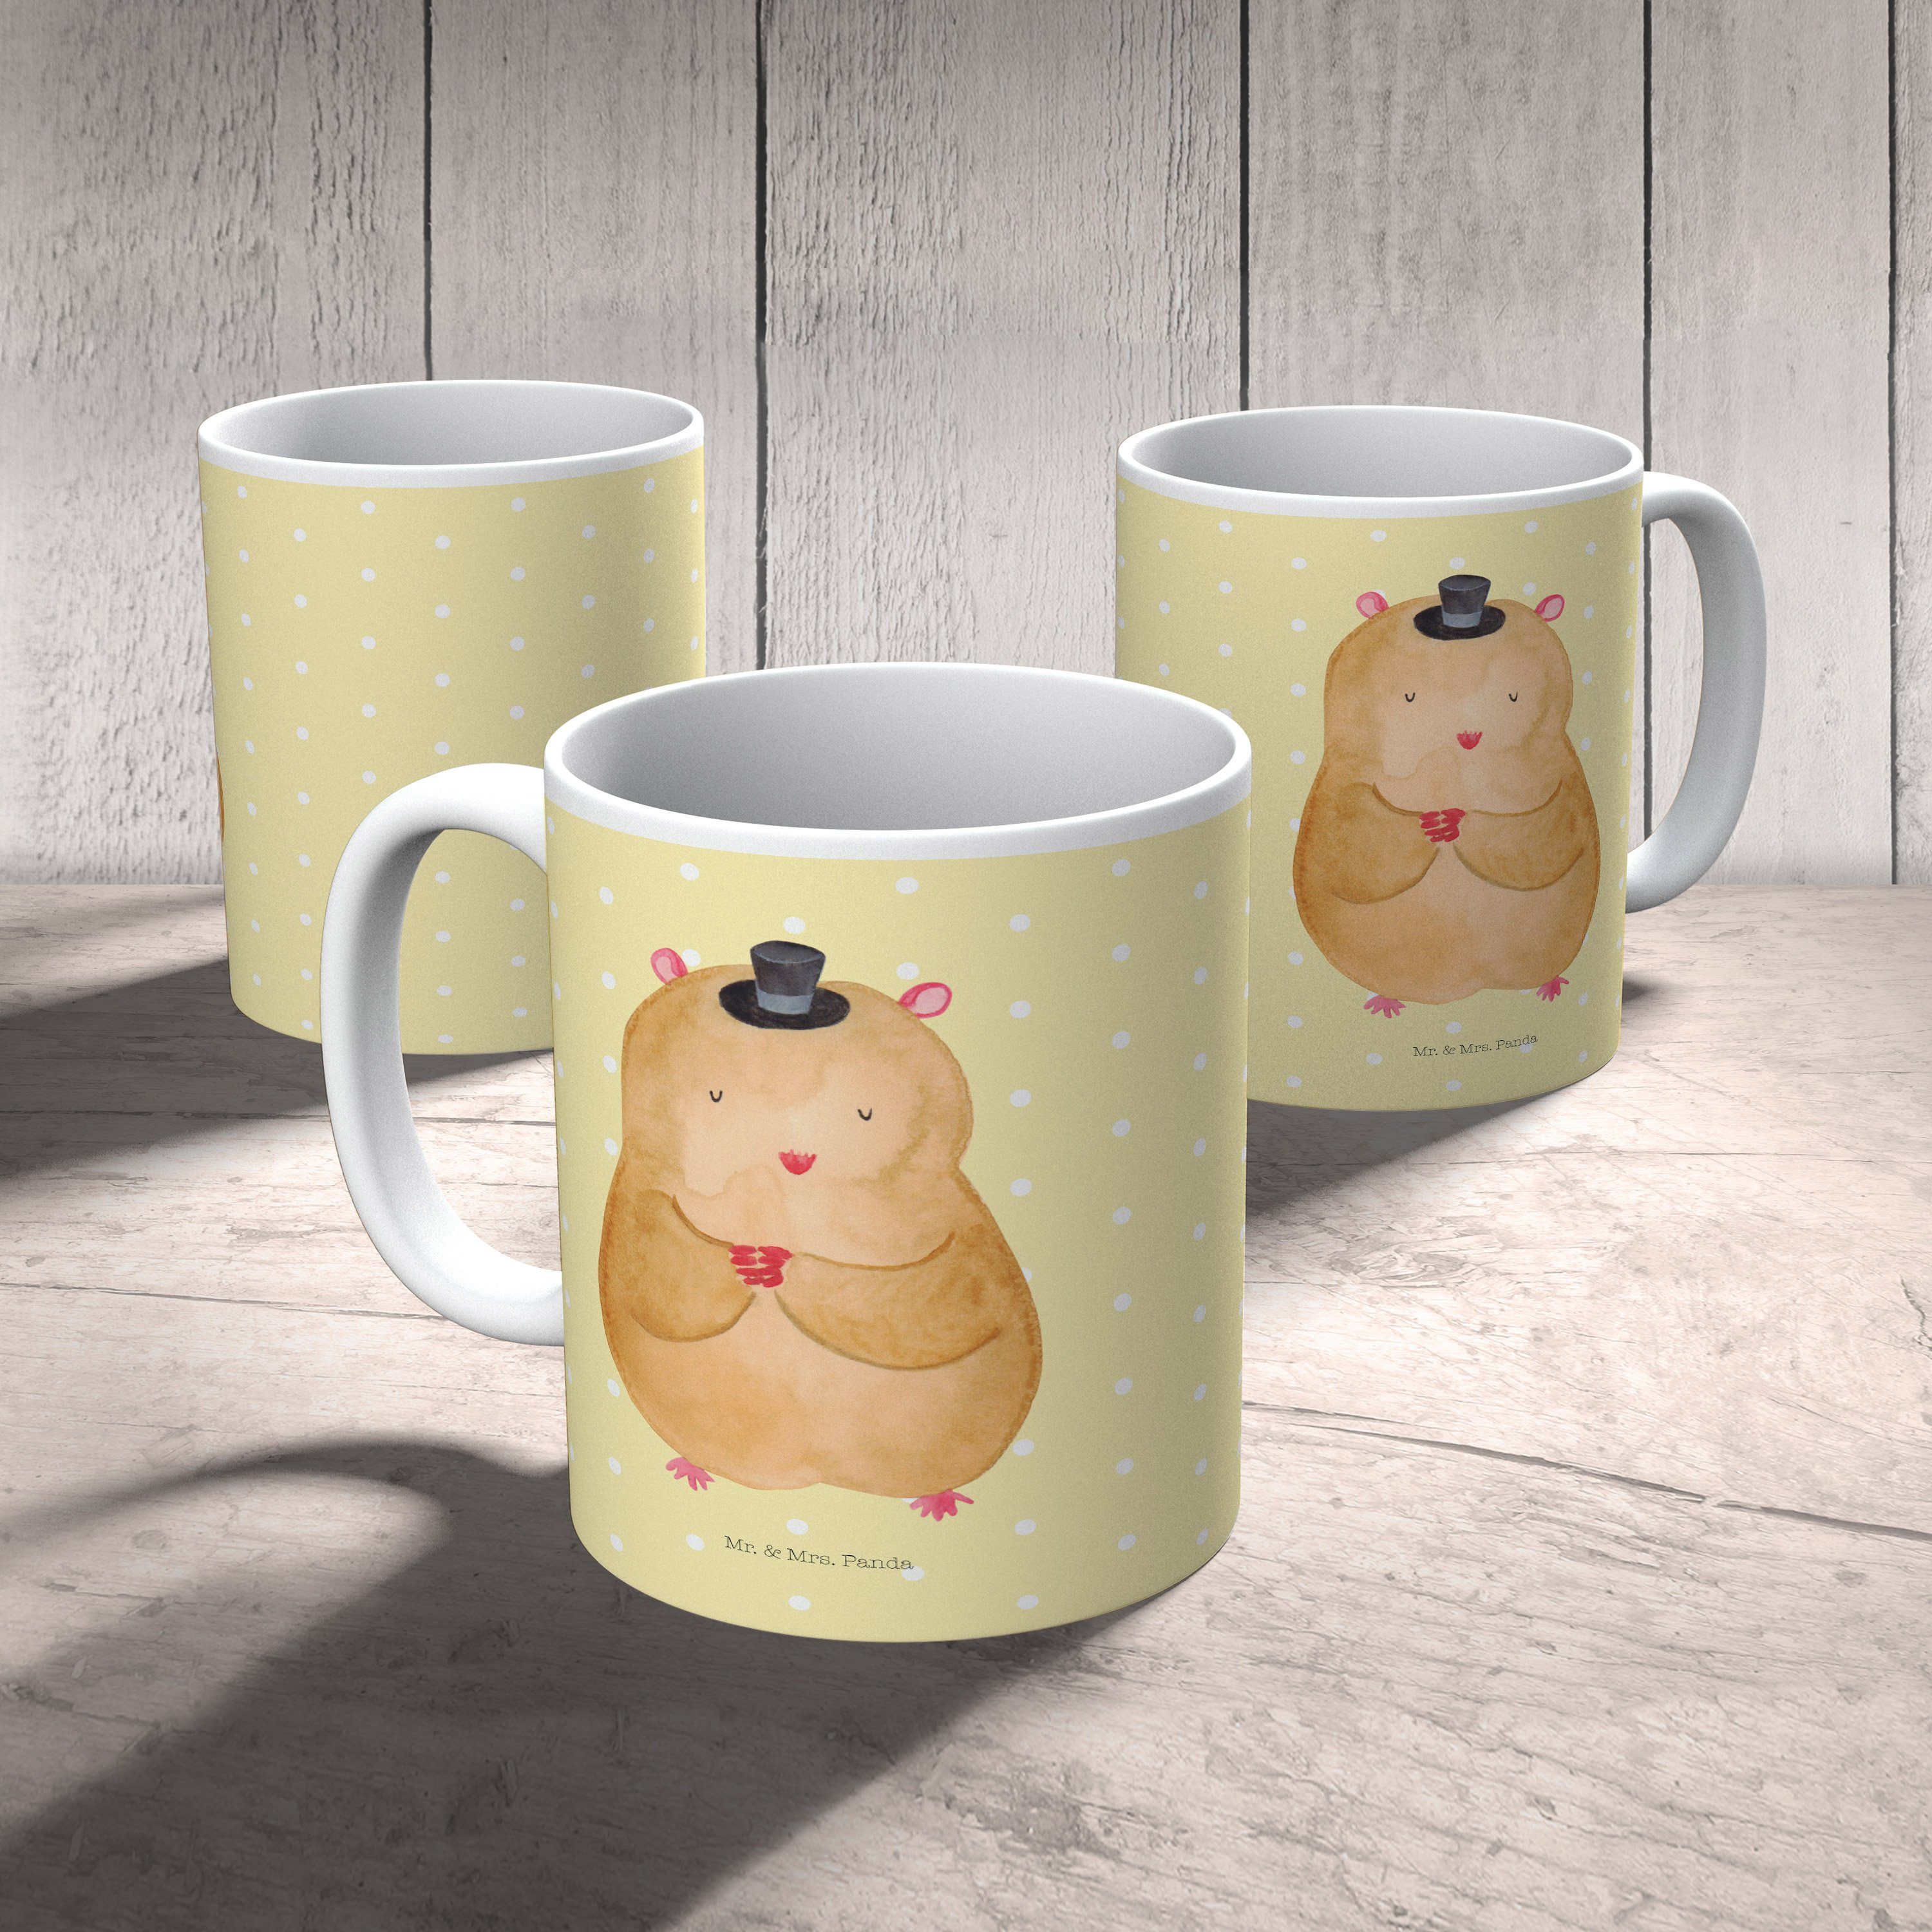 Mr. & Mrs. Gelb Keramik Tiermo, Tasse Tasse, Hut Panda Geschenk, - - Hamster Kaffeetasse, Pastell mit